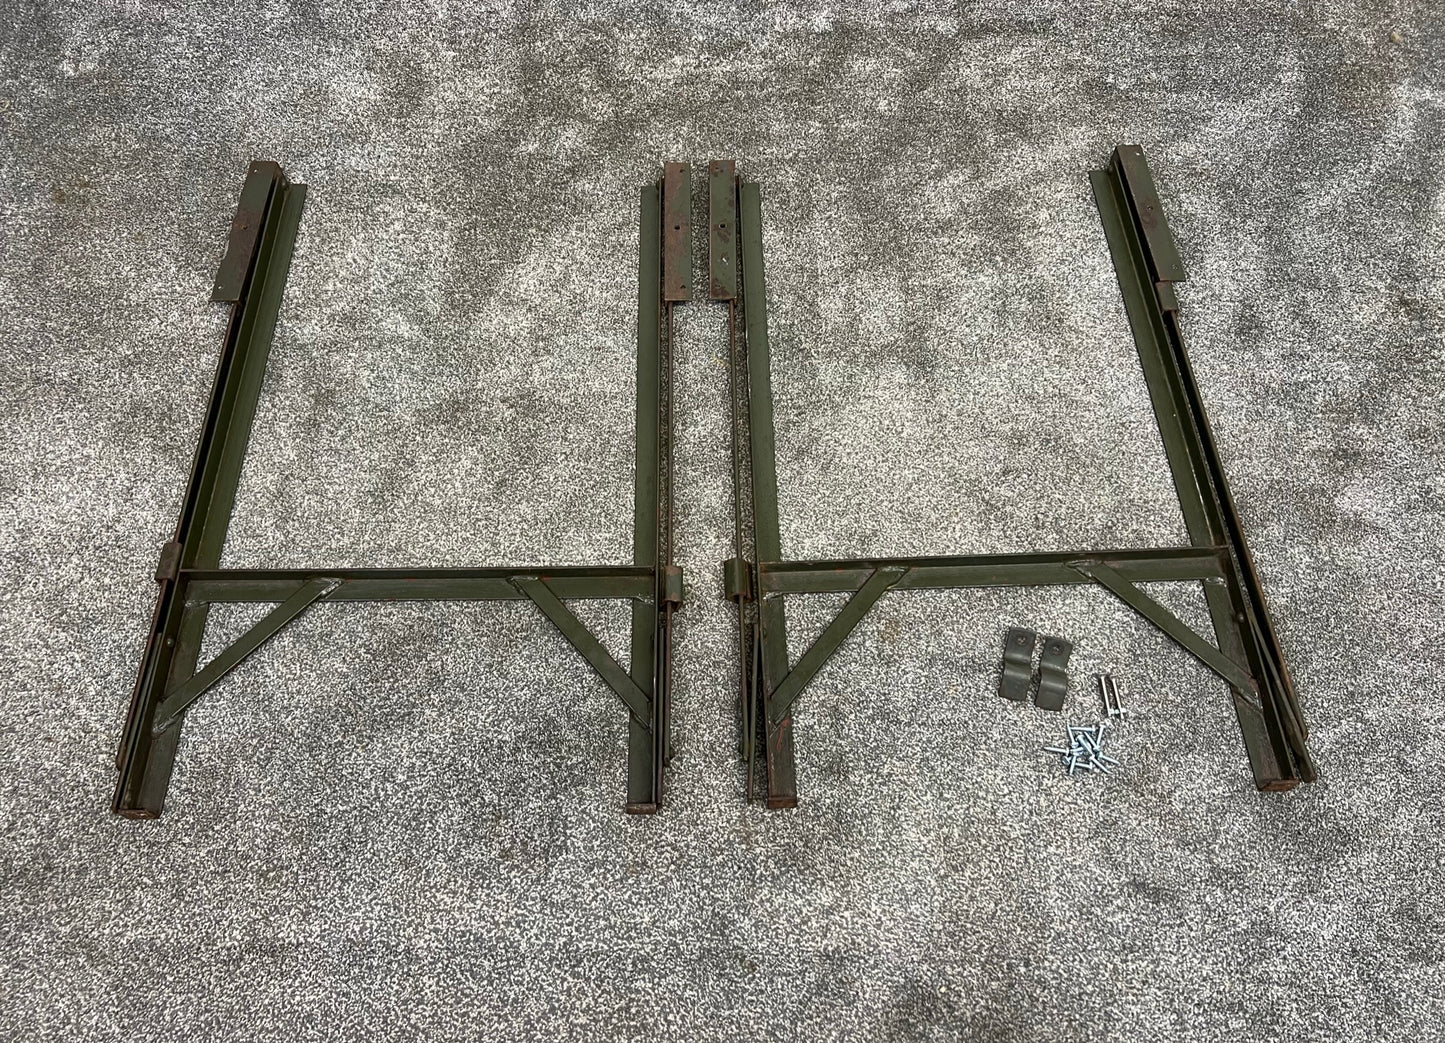 Metal Trestle Table Folding Legs Heavy Duty Reclaimed Industrial Rustic Furniture Table Legs